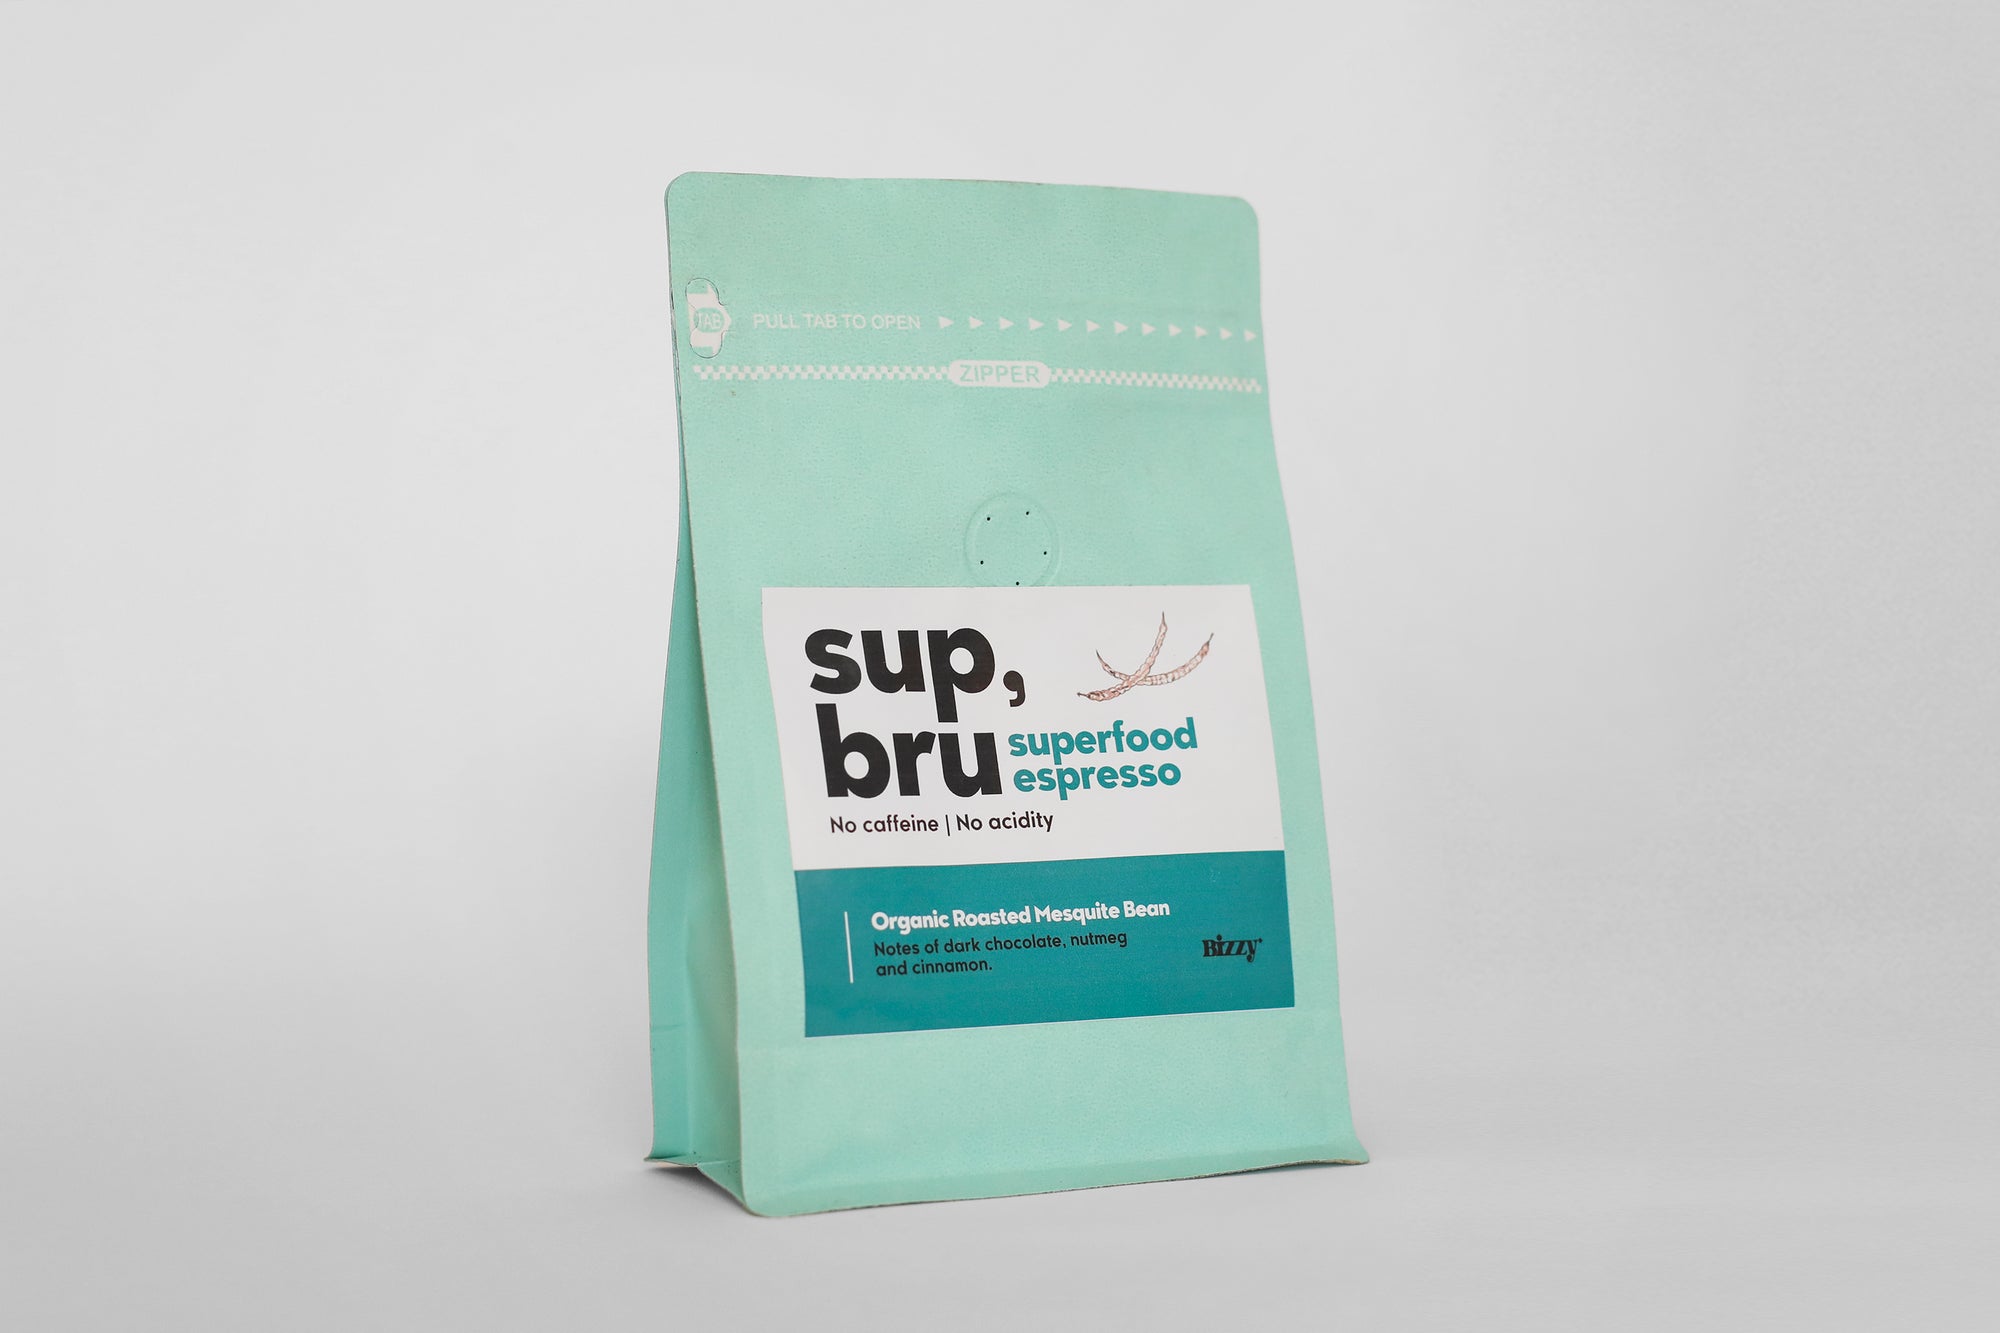 Sup, Bru - Superfood Espresso